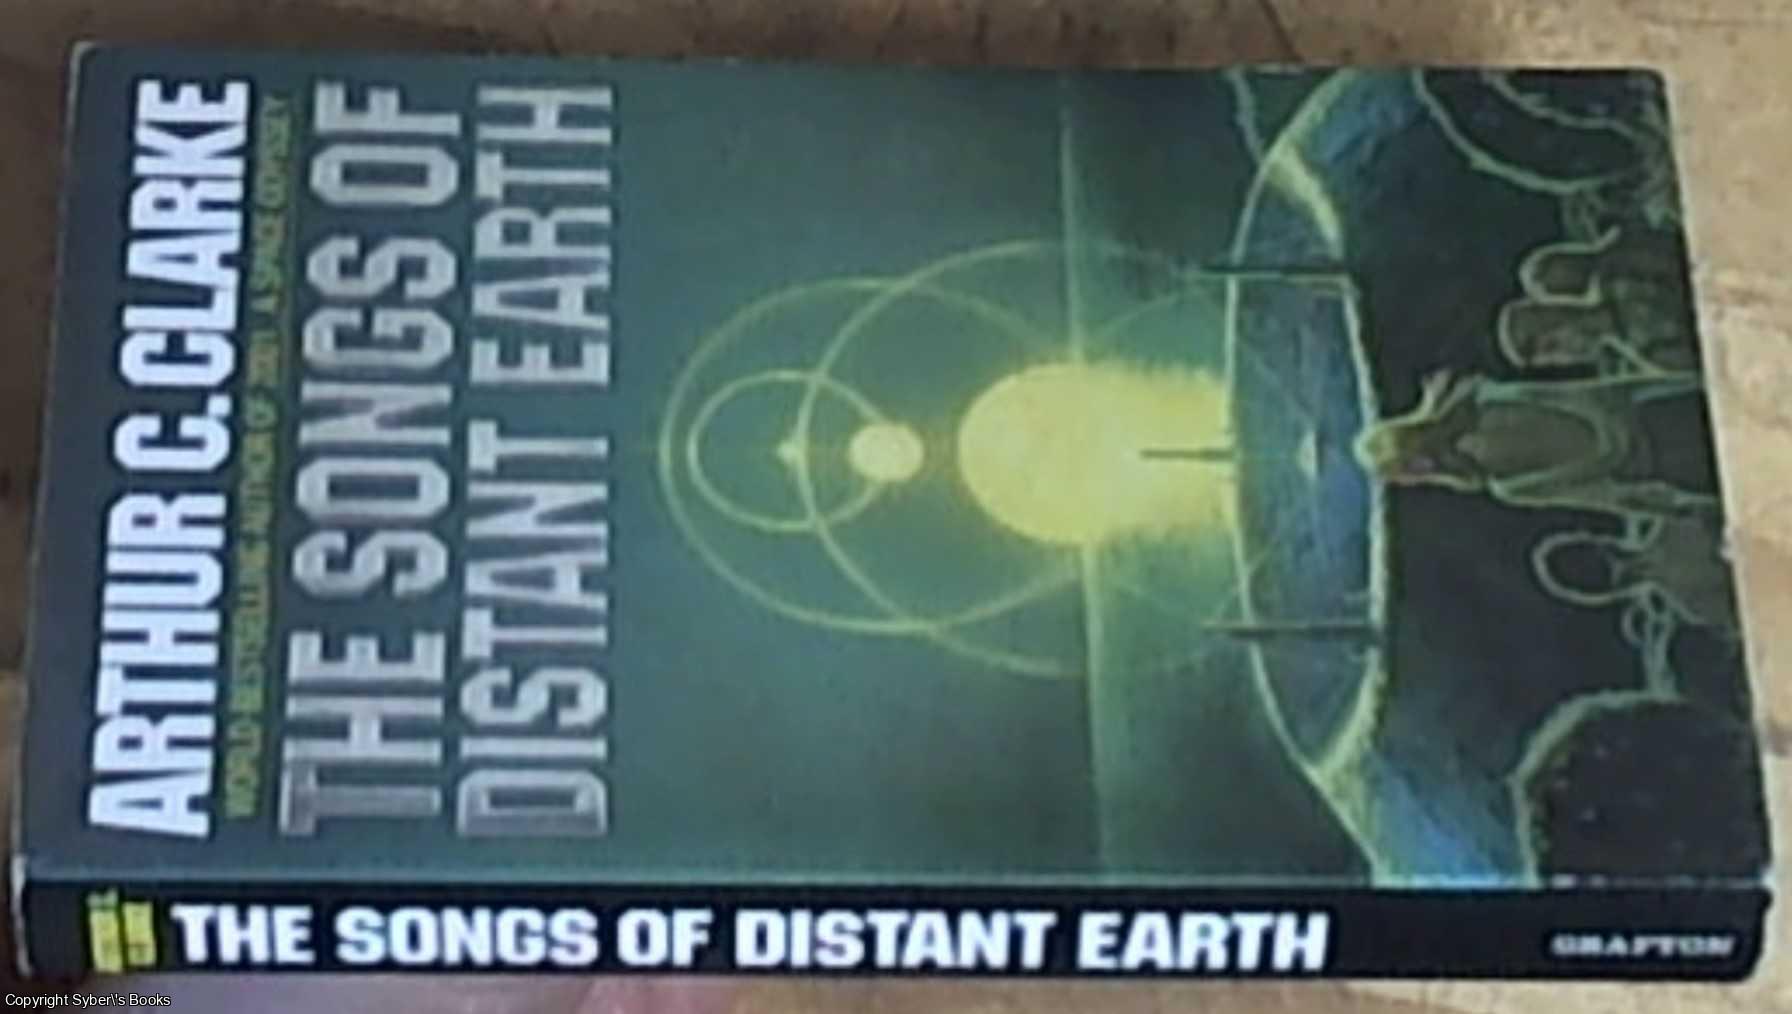 Clarke, Arthur C. - The Songs of Distant Earth